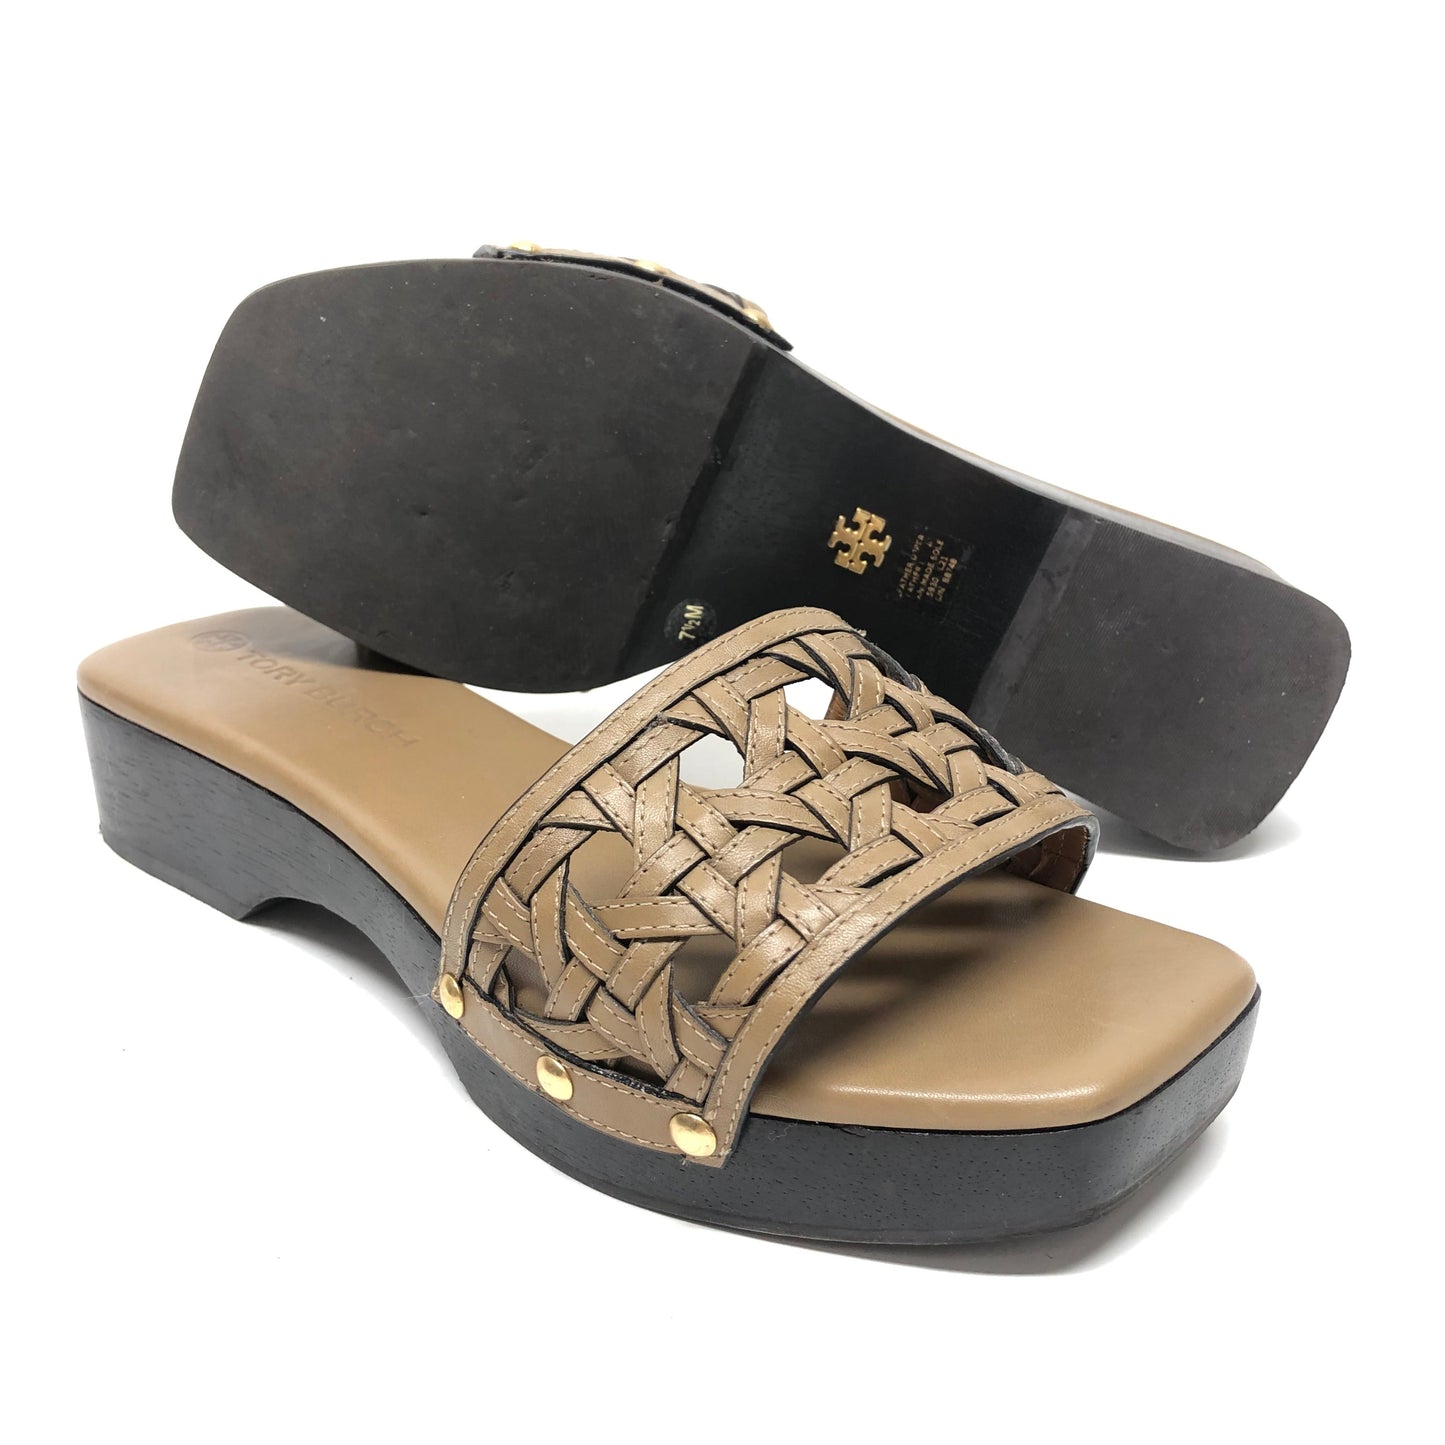 Brown Sandals Designer Tory Burch, Size 7.5